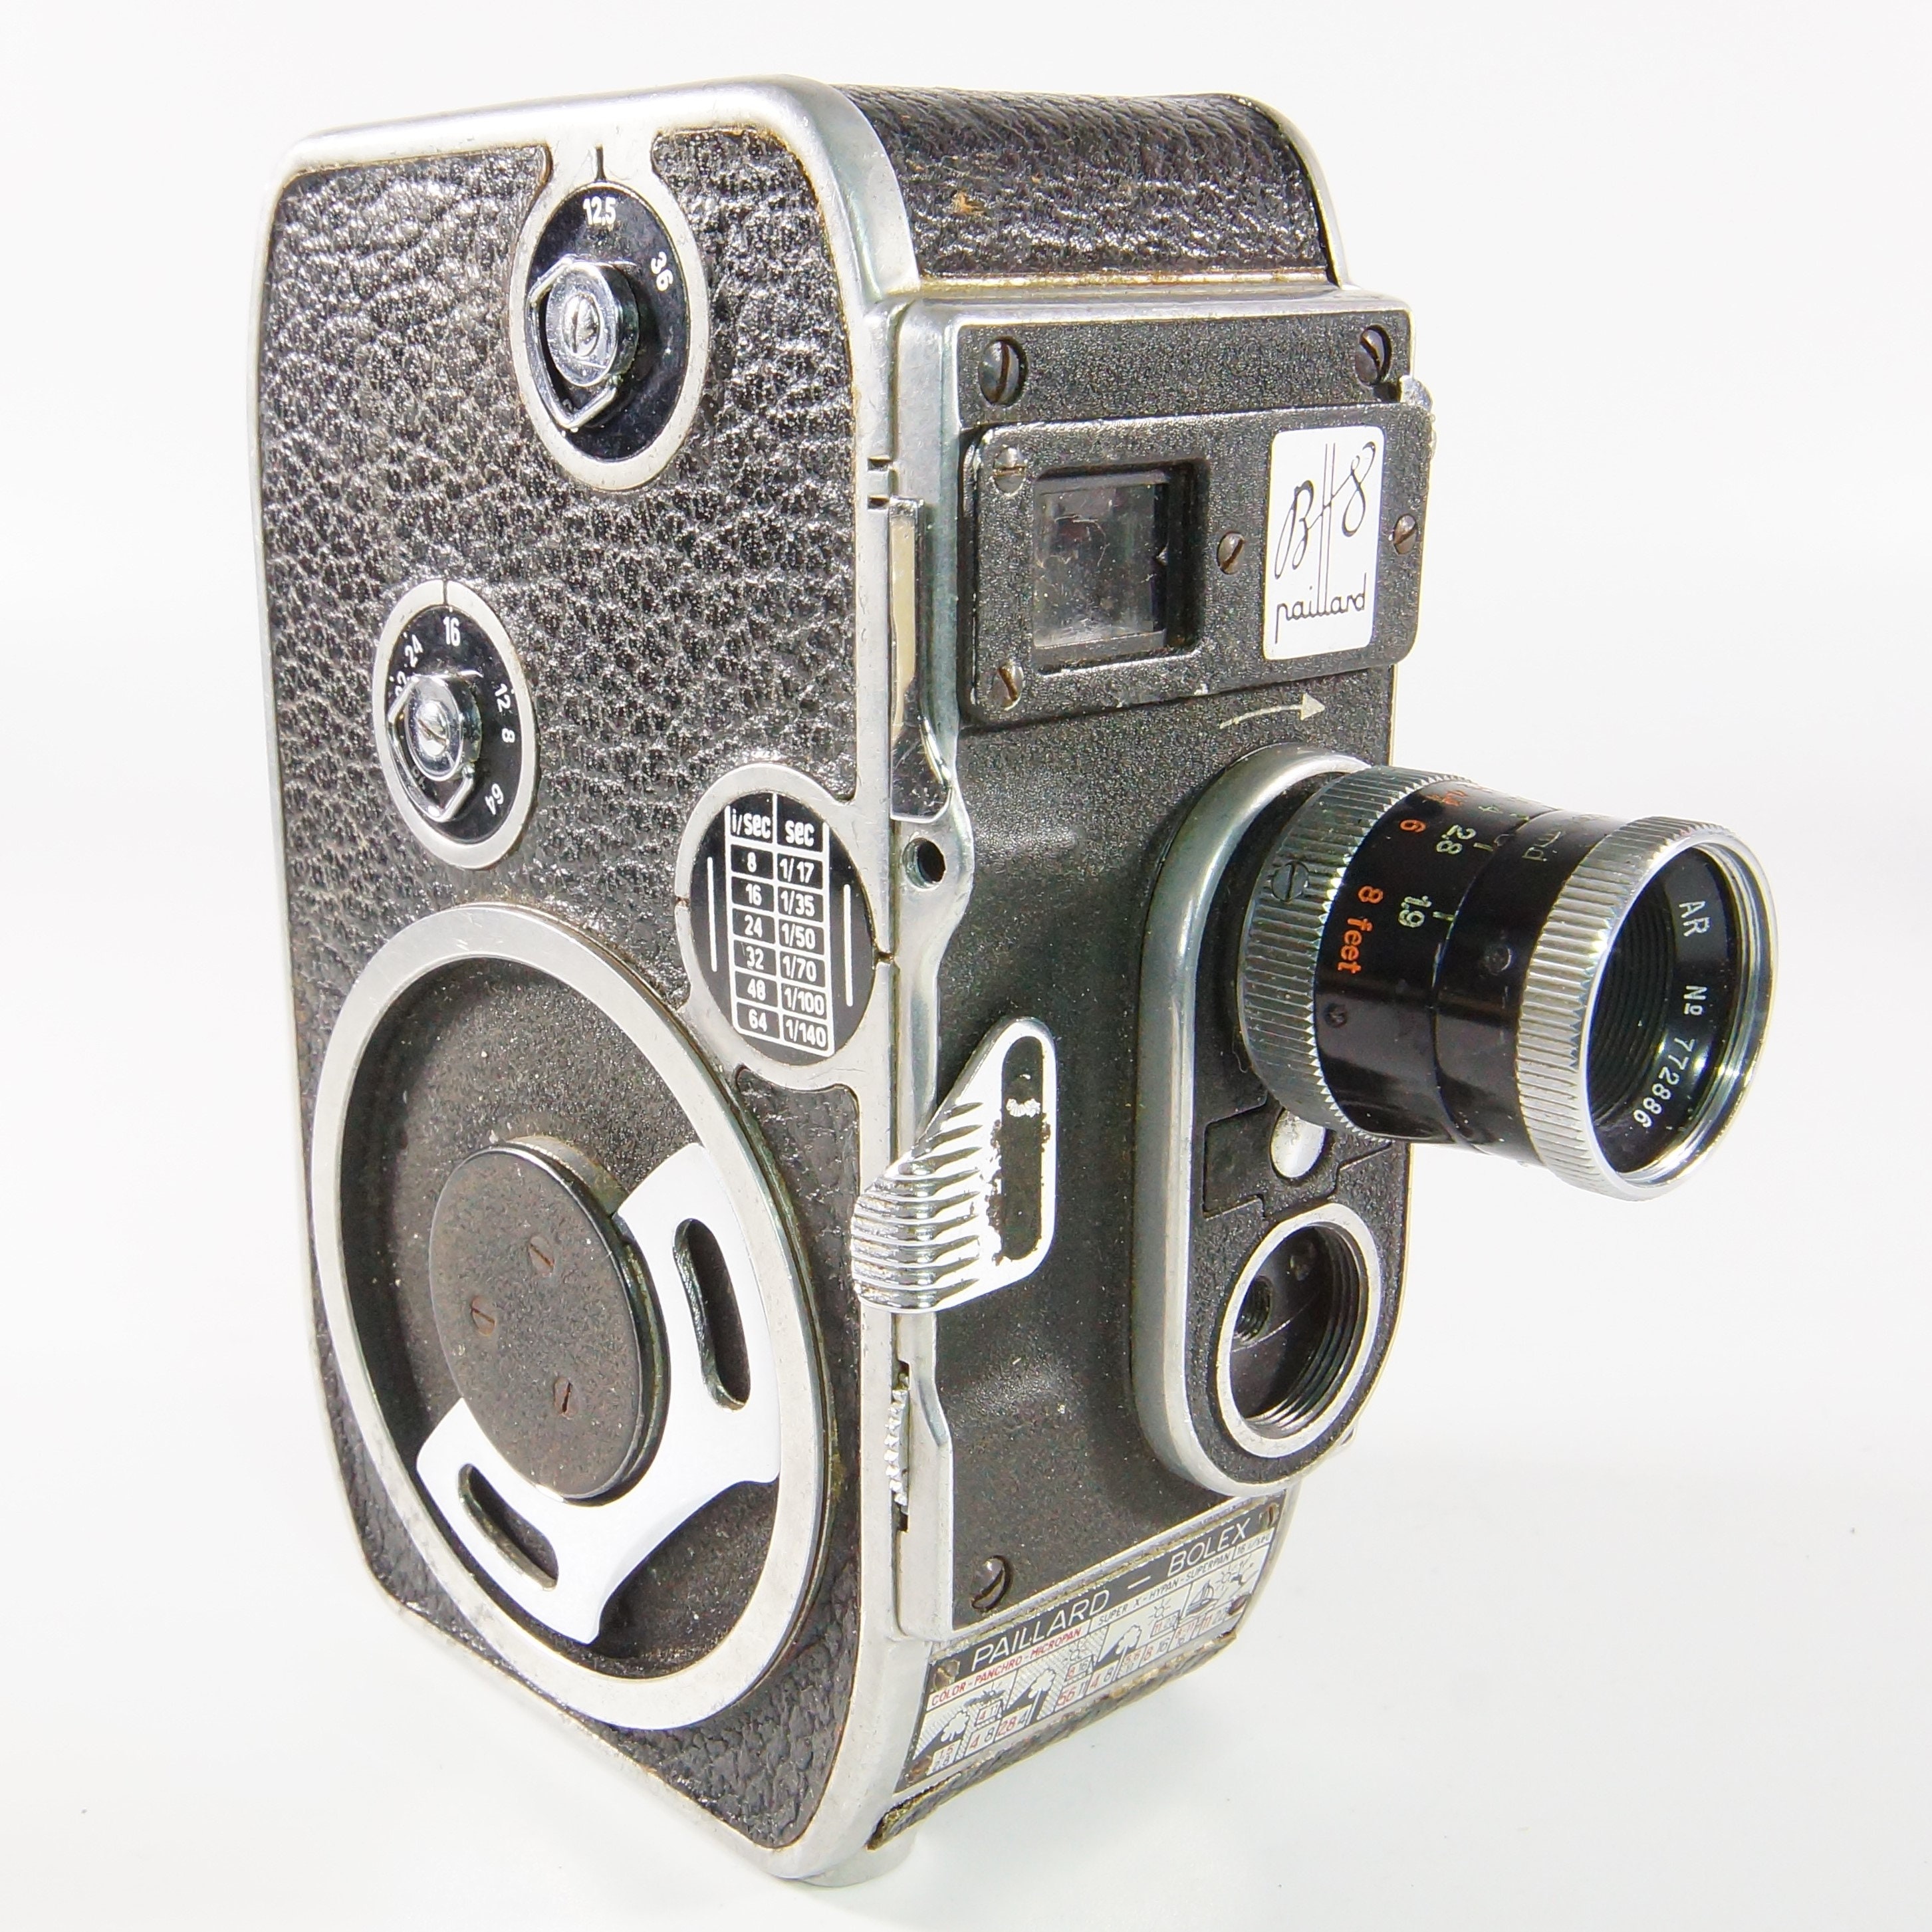 Paillard Bolex Vintage B8 8mm Movie Camera With 13mm F1.9 Lens From 1954 -   Canada